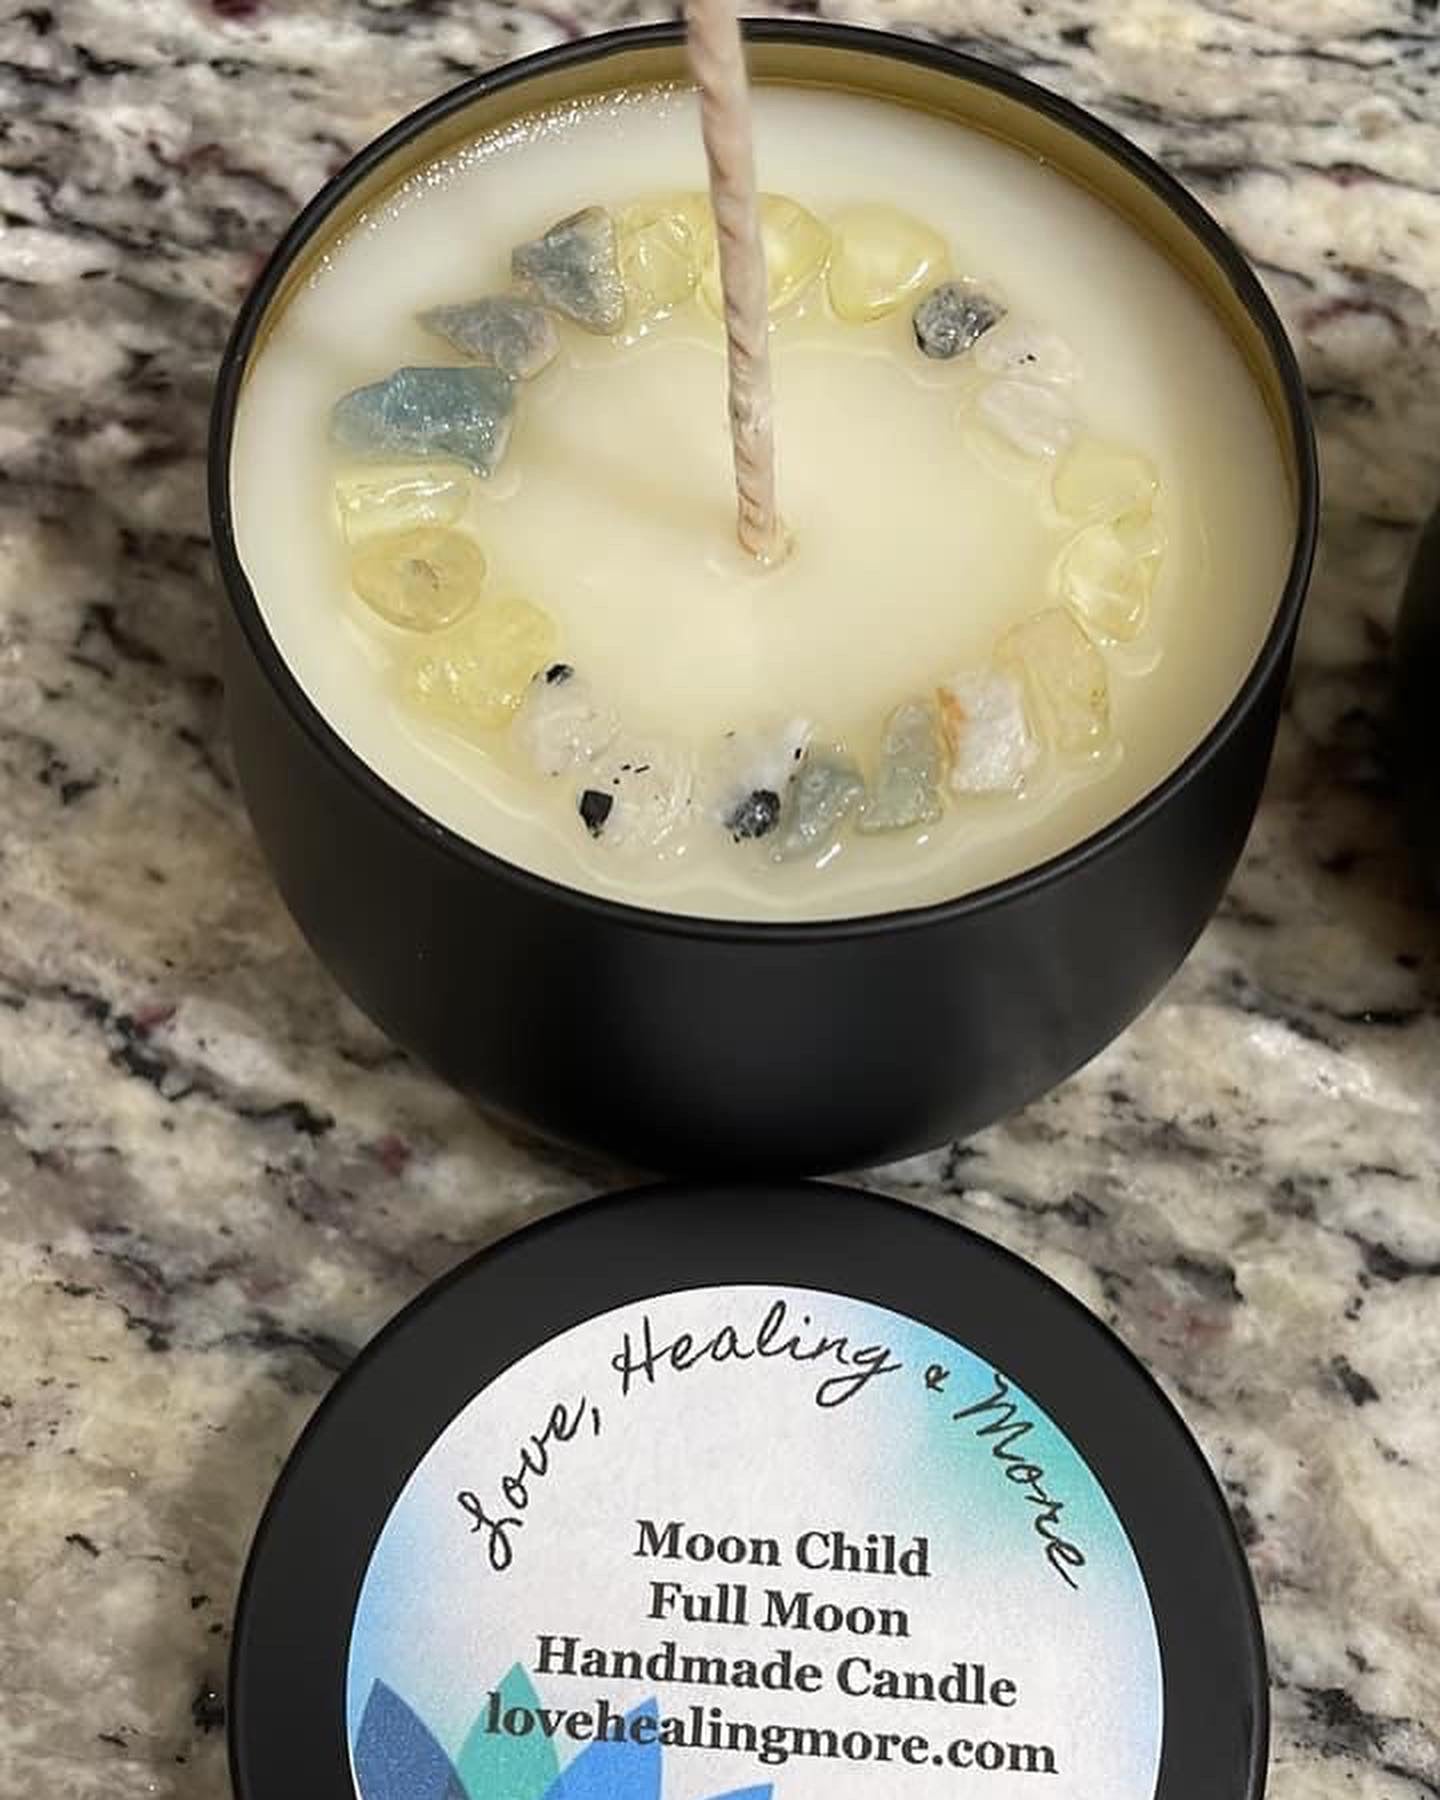 Handmade 4 oz. Moon Child Full Moon Fragrance Candle